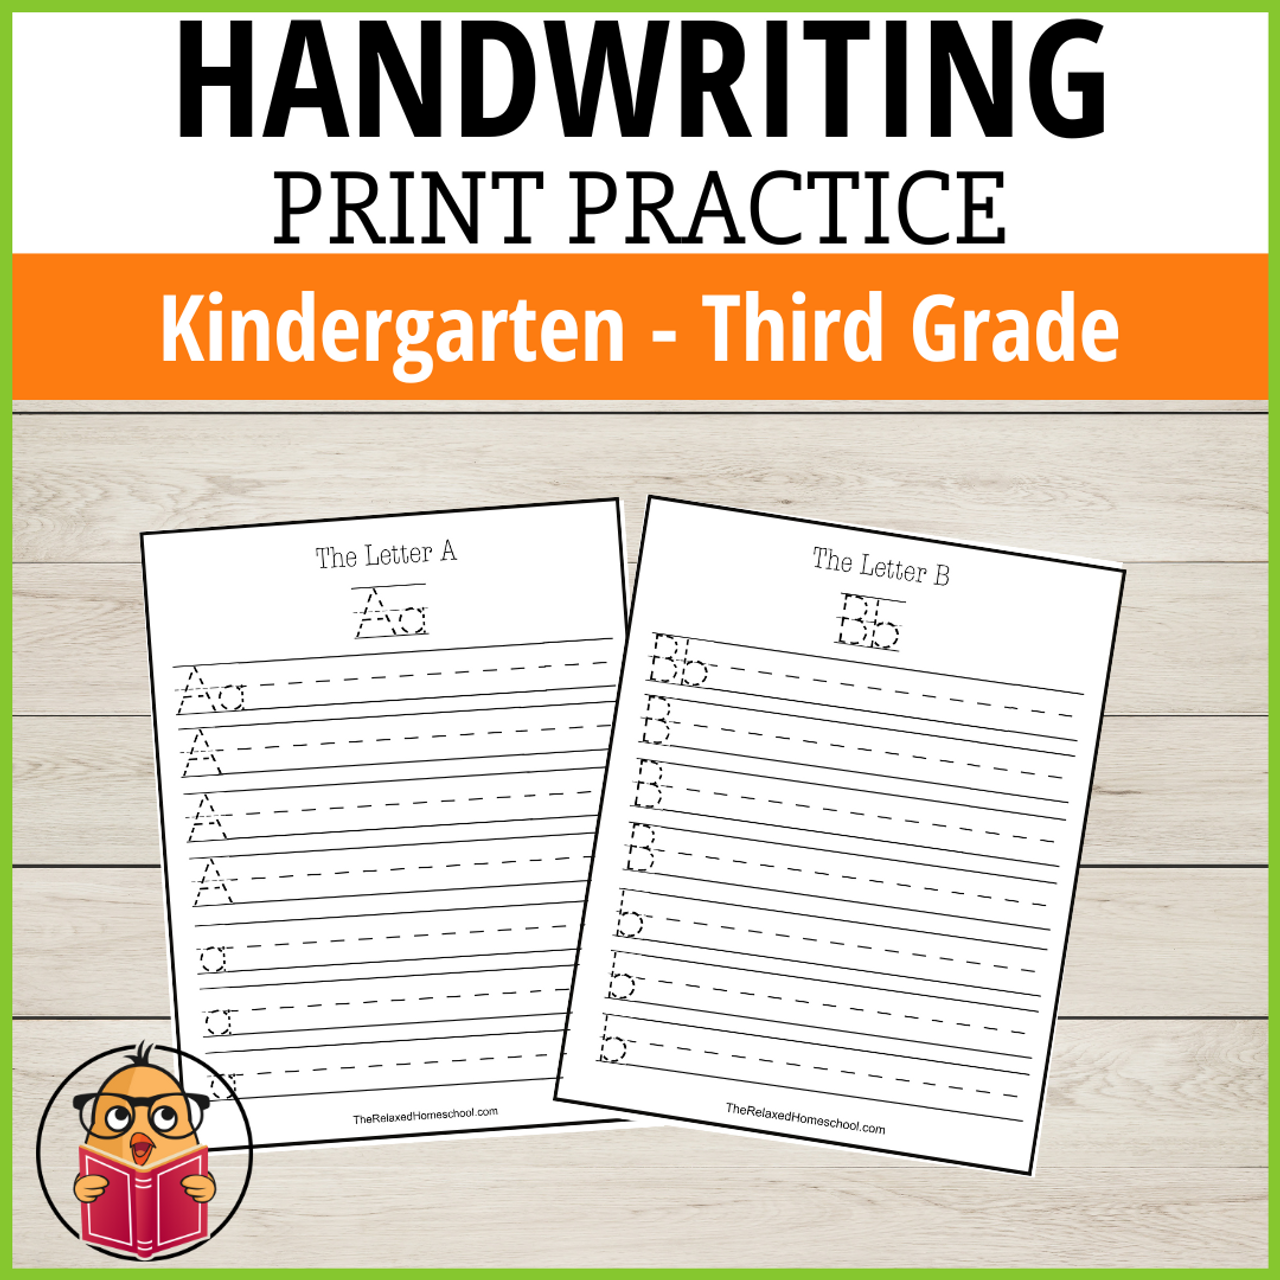 Handwriting Practice: Print - K - 3rd